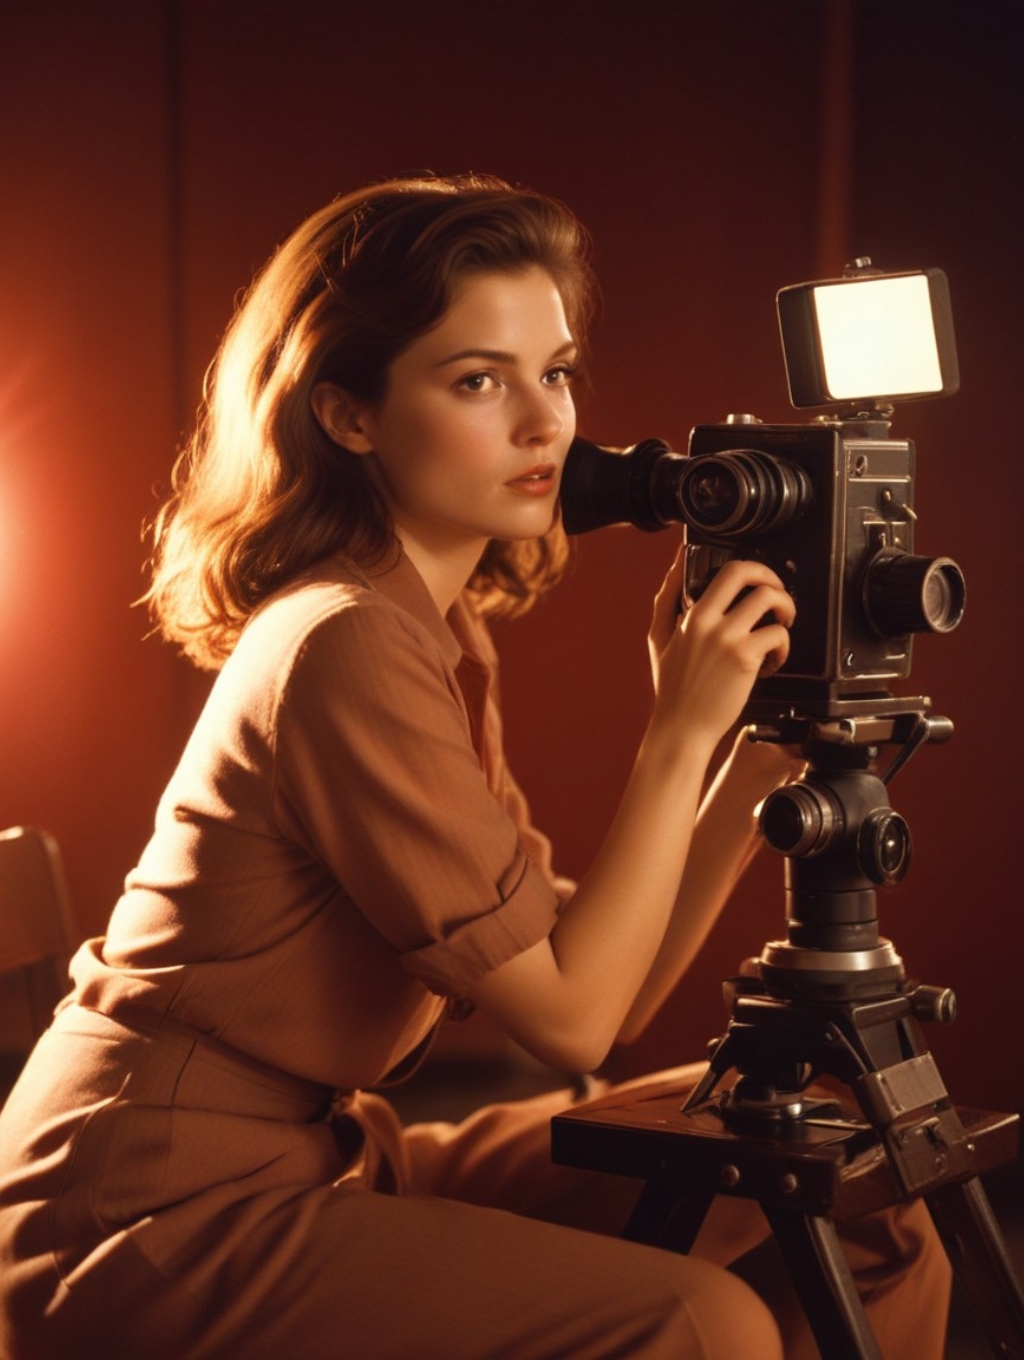 Hollywood Directors Chair Women: Art Portraits & Image Frames-Theme:4